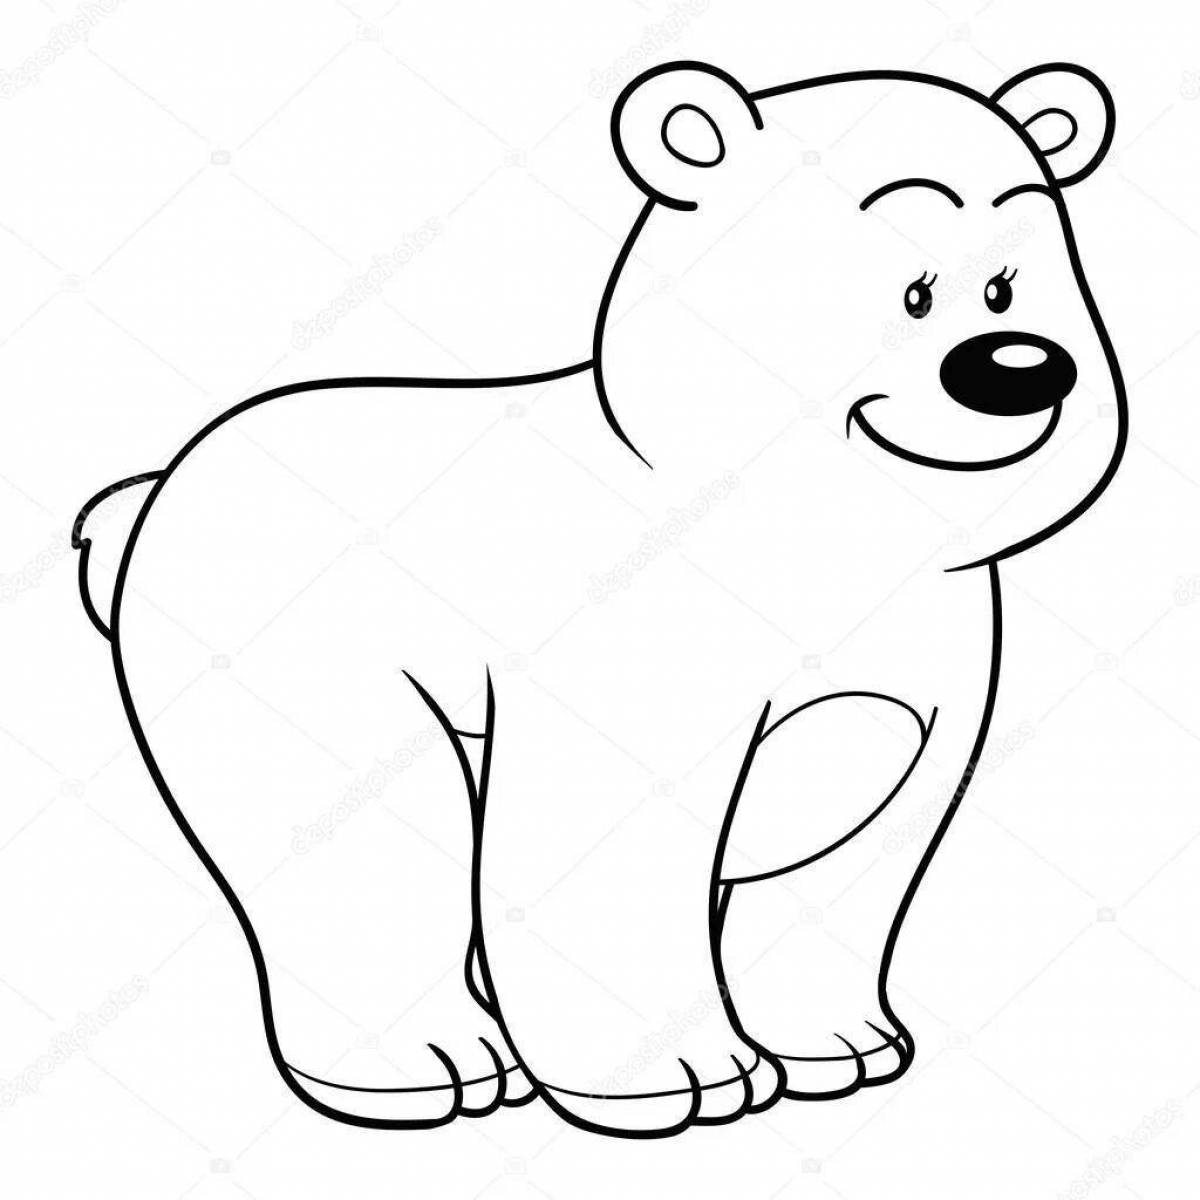 Colouring polar bear for children 2-3 years old